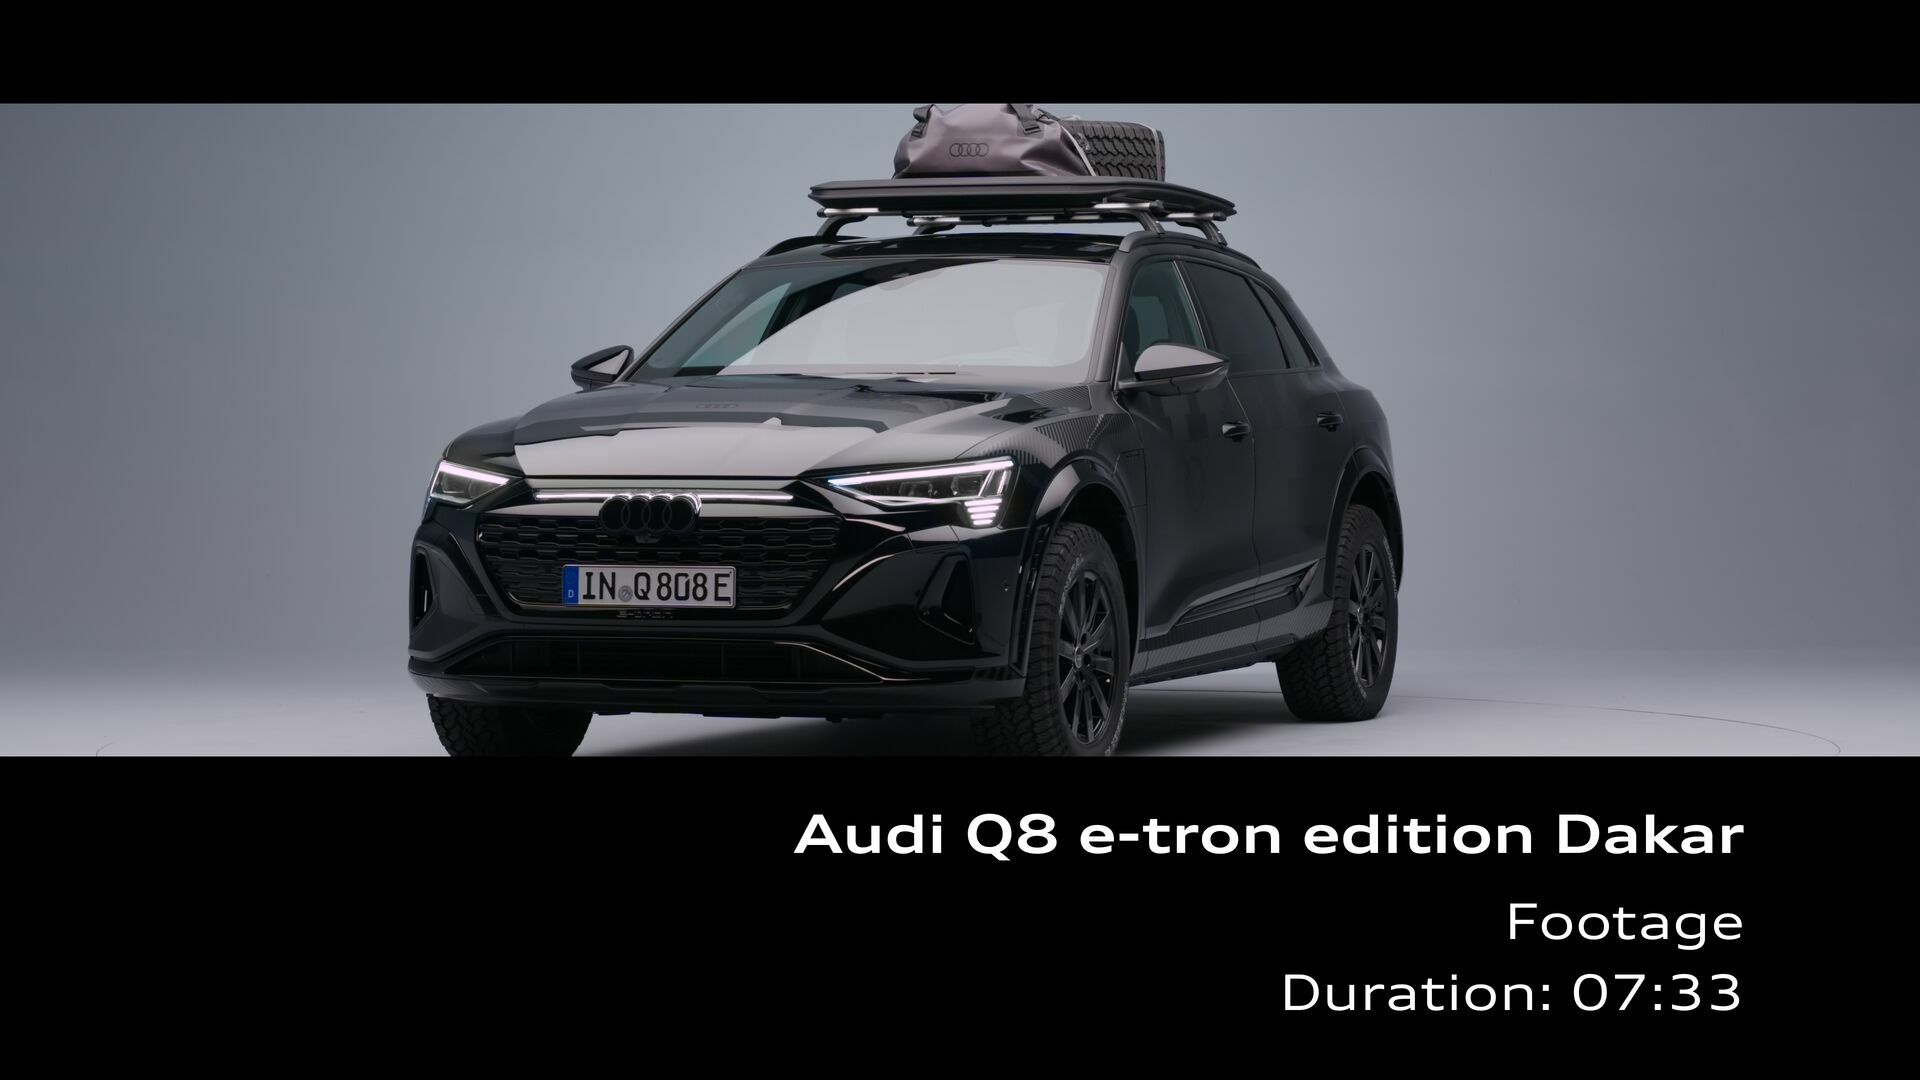 Audi Q8 e-tron edition Dakar – Footage (Studio)